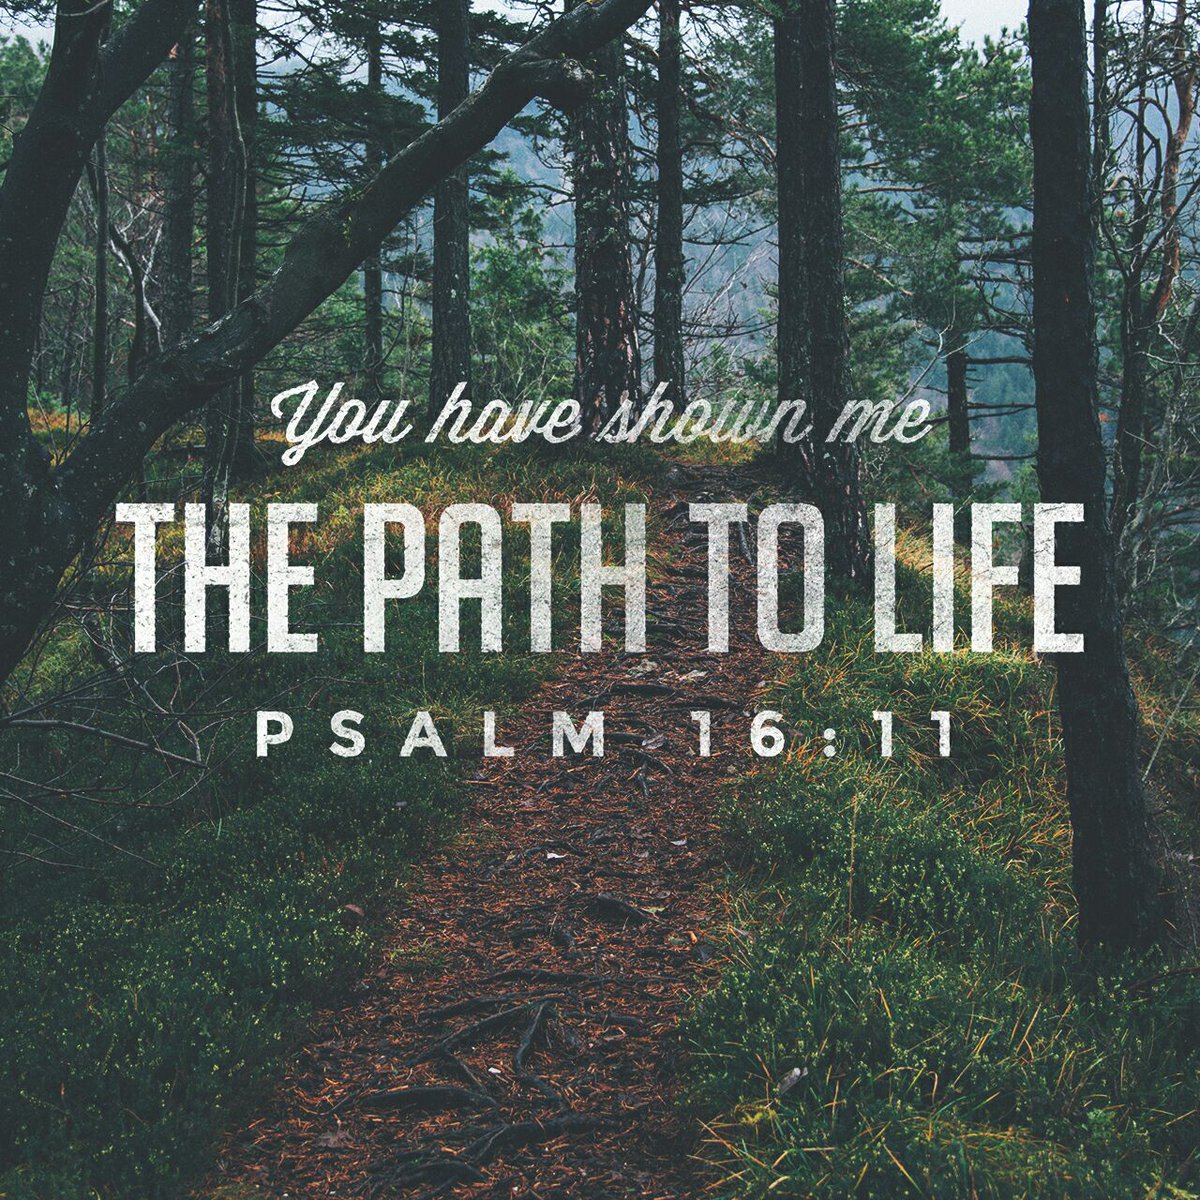 Psalm 16:11